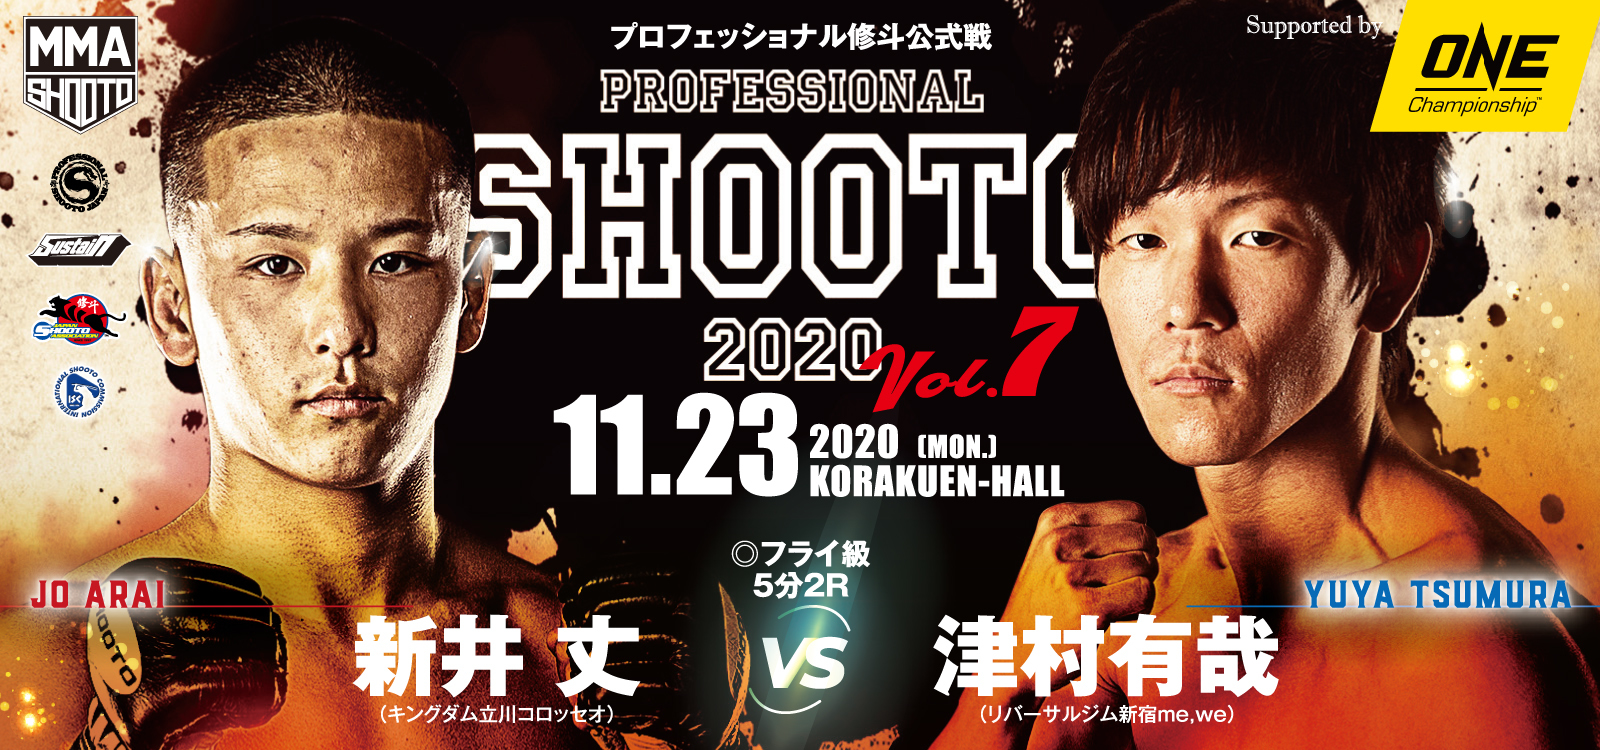 『PROFESSIONAL SHOOTO 2020 Vol.7 Supported by ONE Championship』の後楽園ホール大会最終戦で、追加カードが発表された